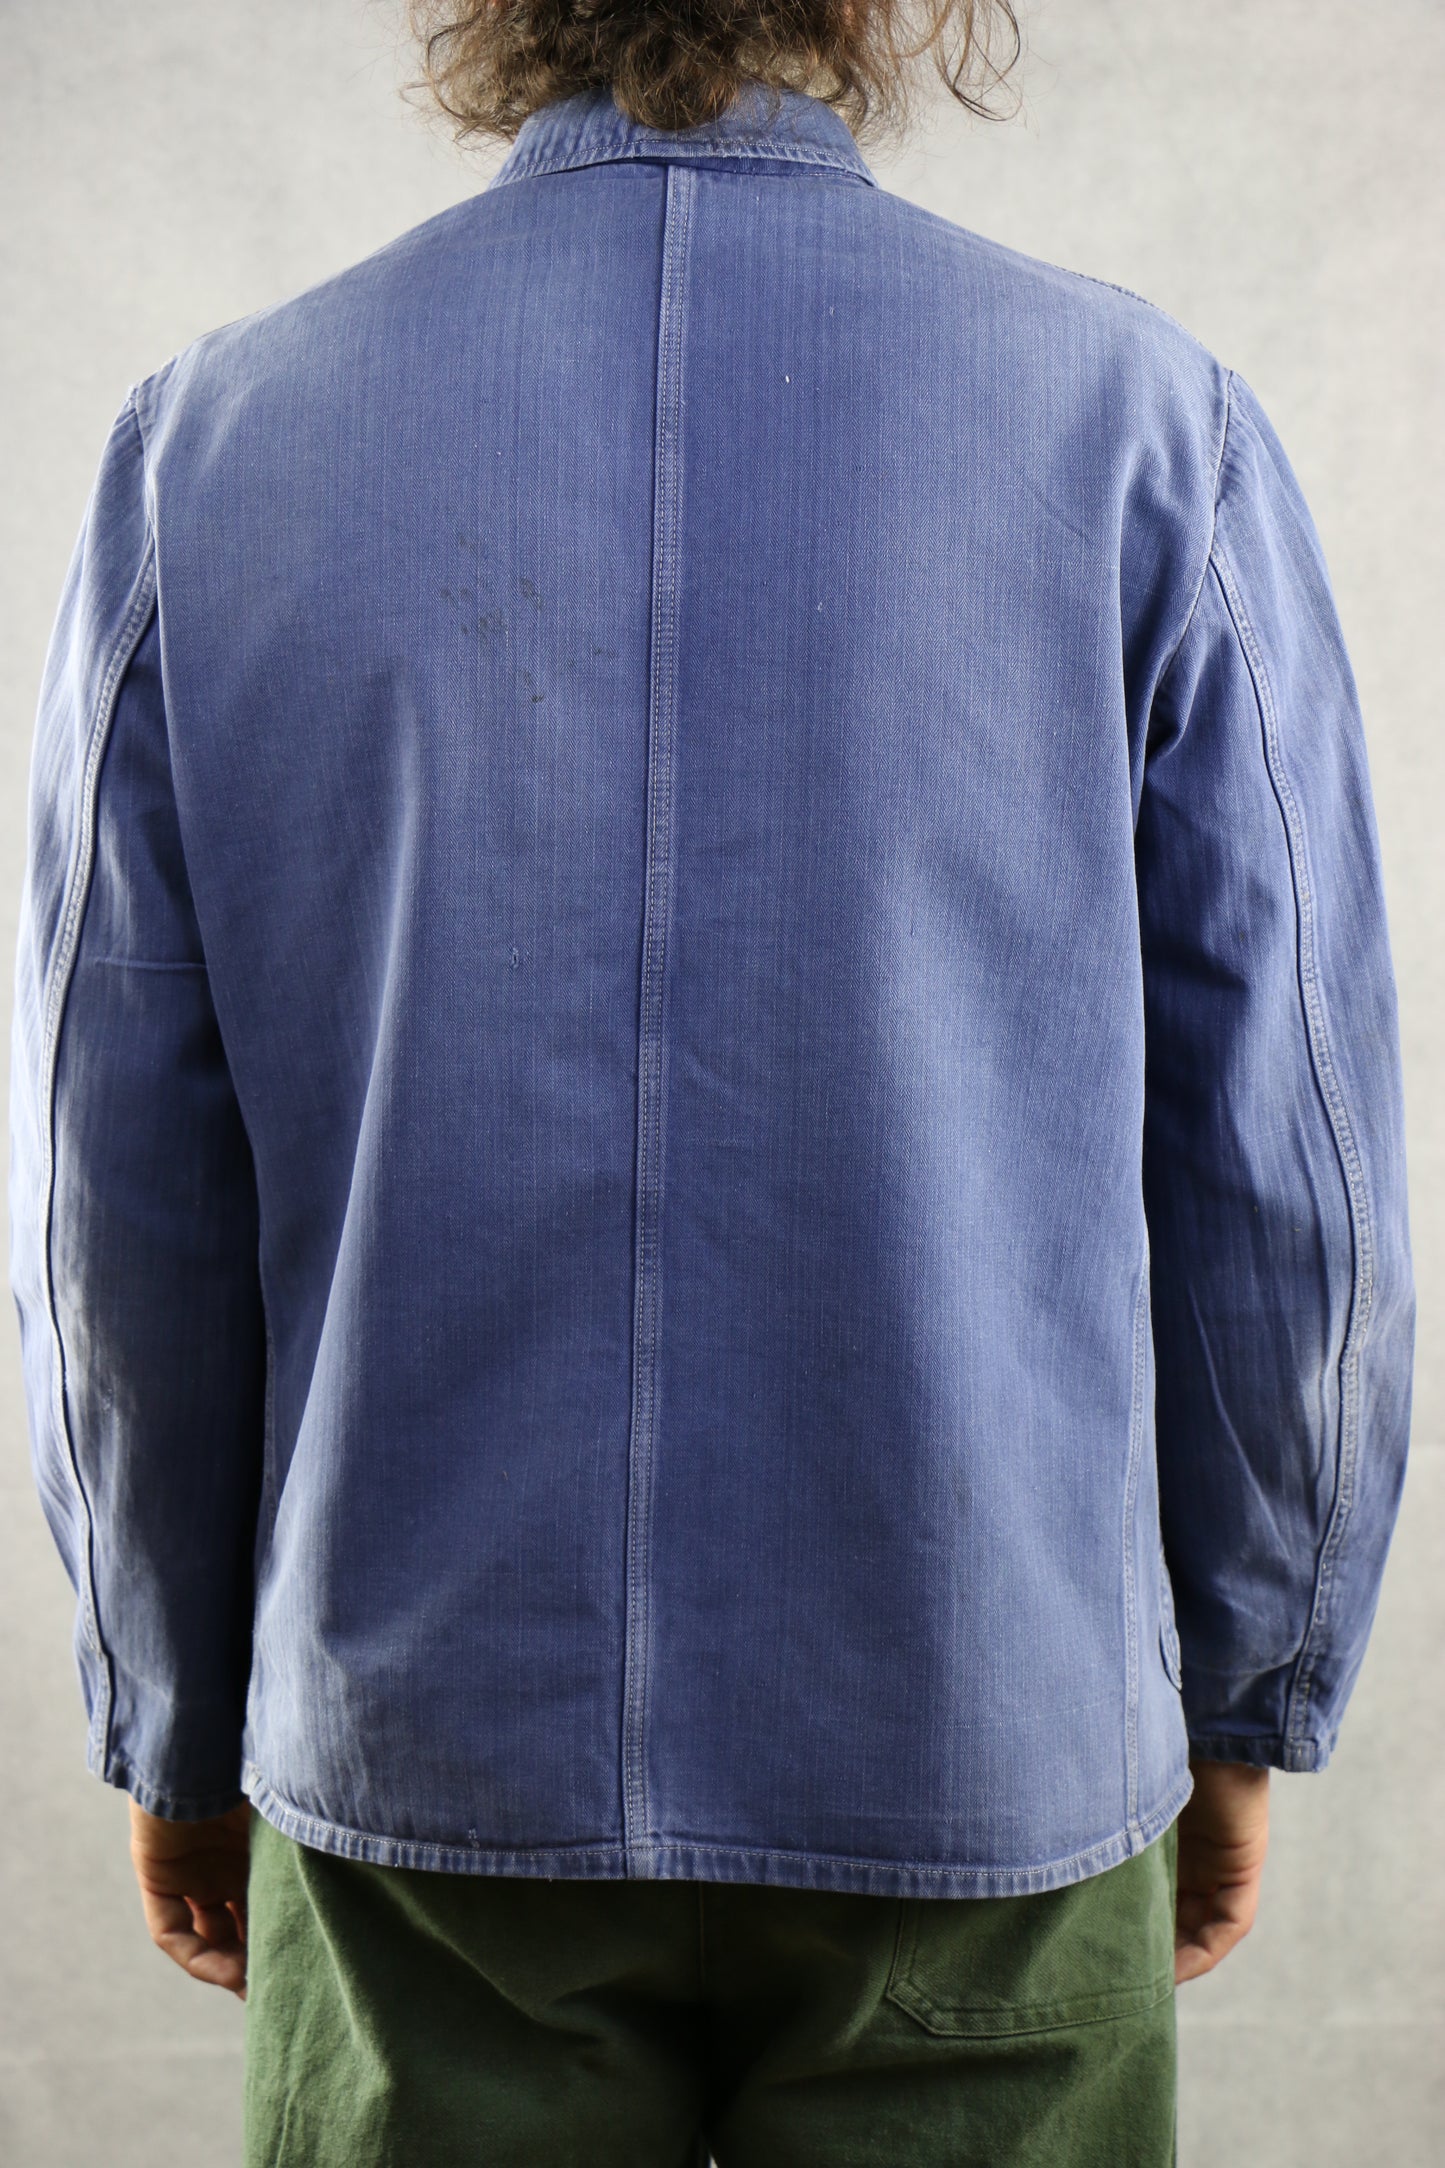 BP Work Jacket - vintage clothing clochard92.com